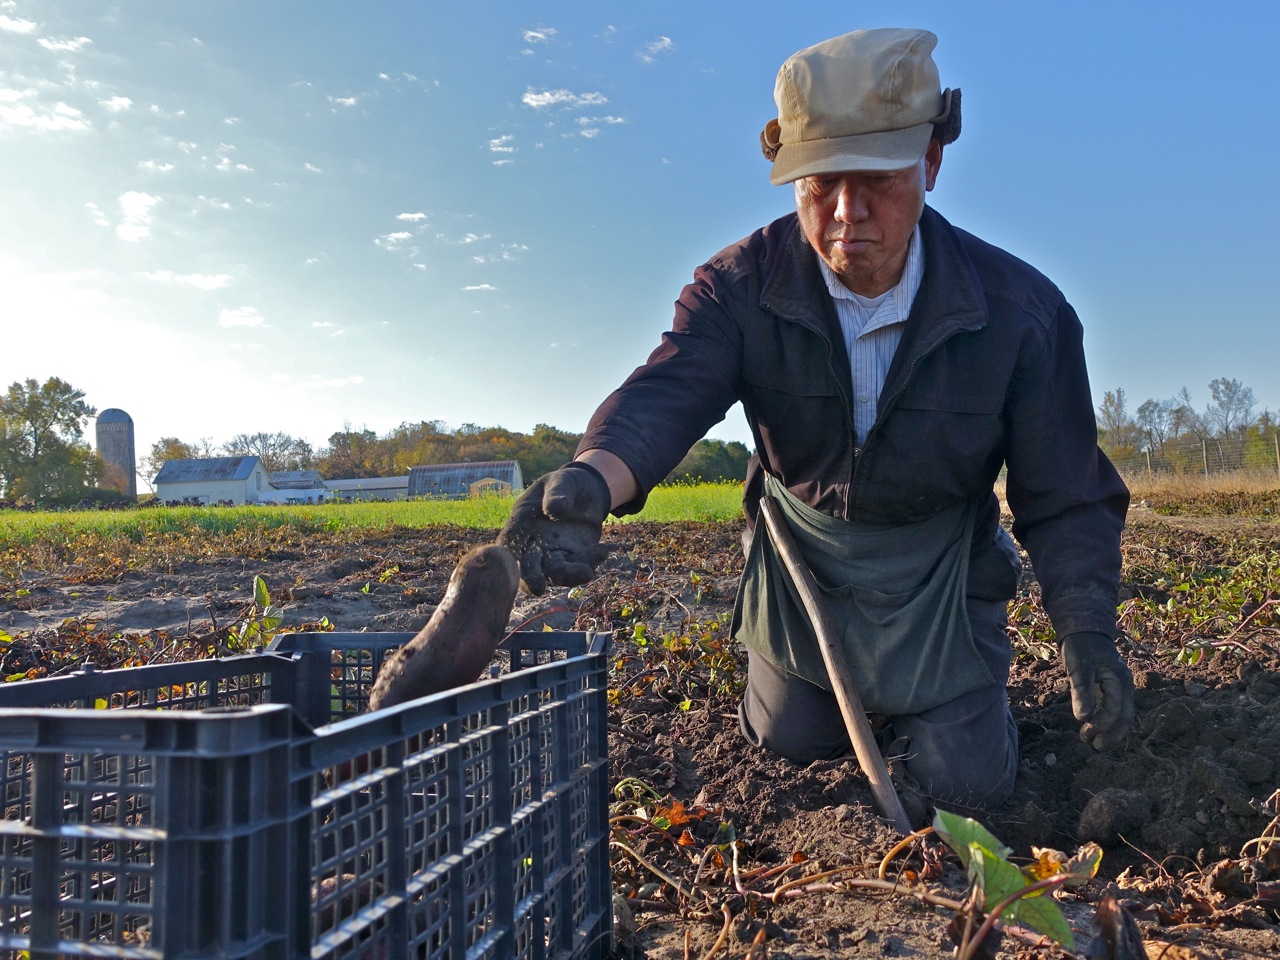 A man harvesting a potato.